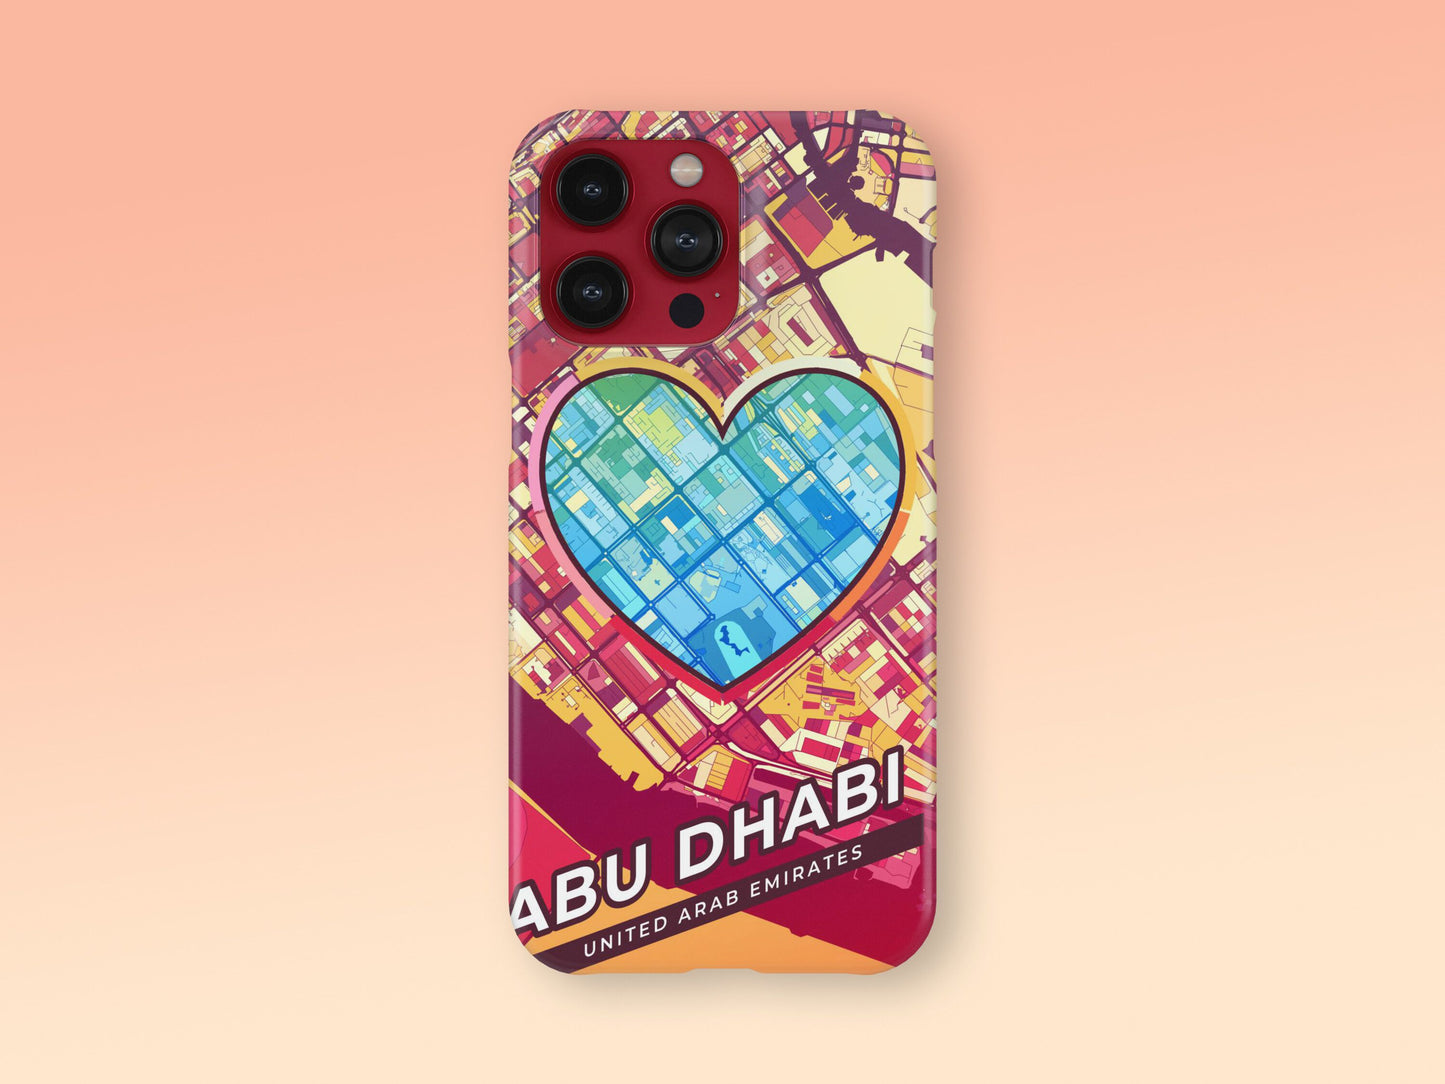 Abu Dhabi United Arab Emirates slim phone case with colorful icon. Birthday, wedding or housewarming gift. Couple match cases. 2